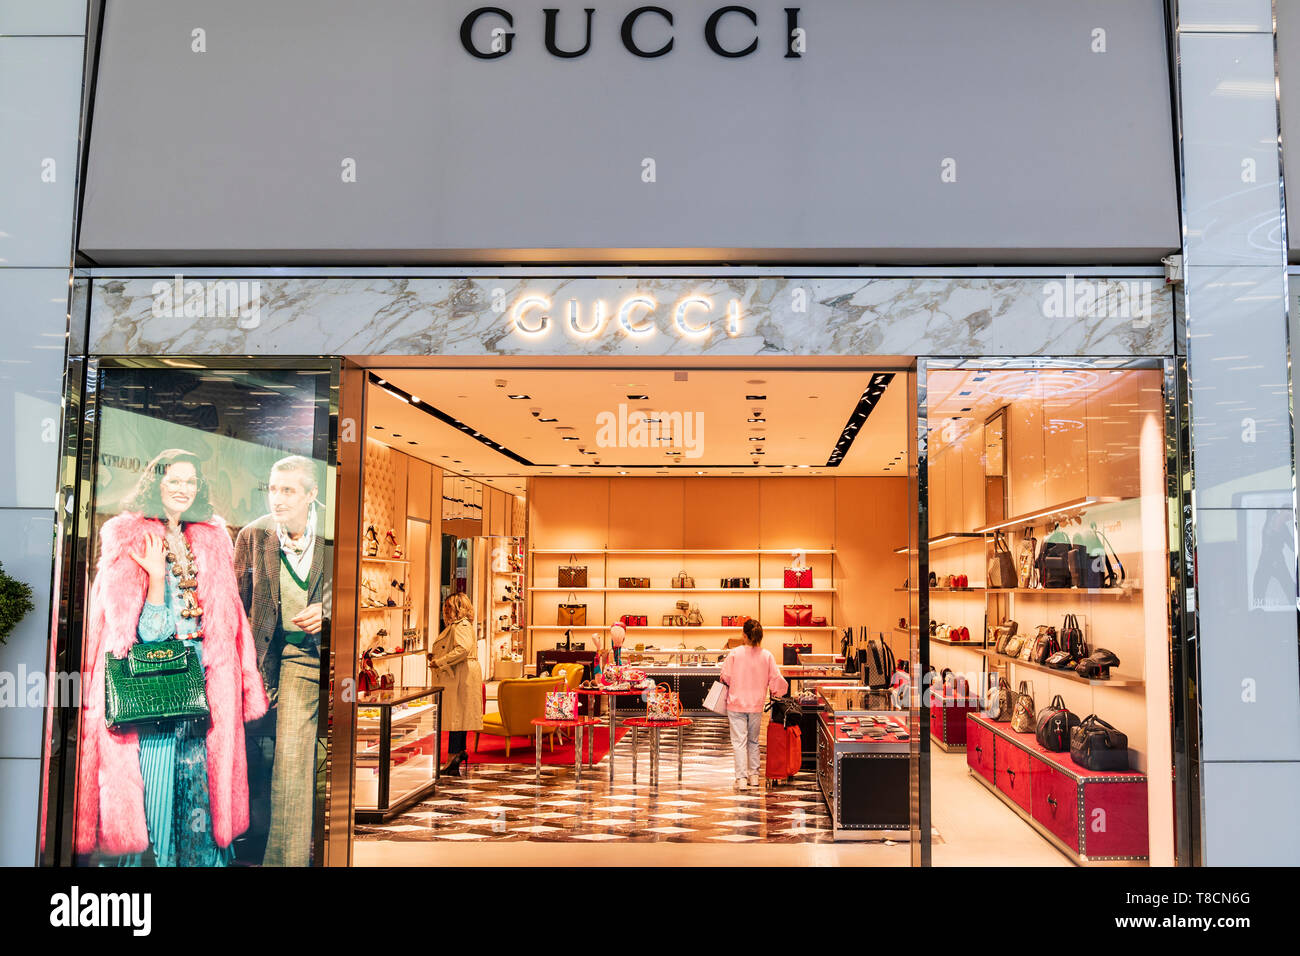 Gucci Handbag High Resolution Stock Photography and Images - Alamy